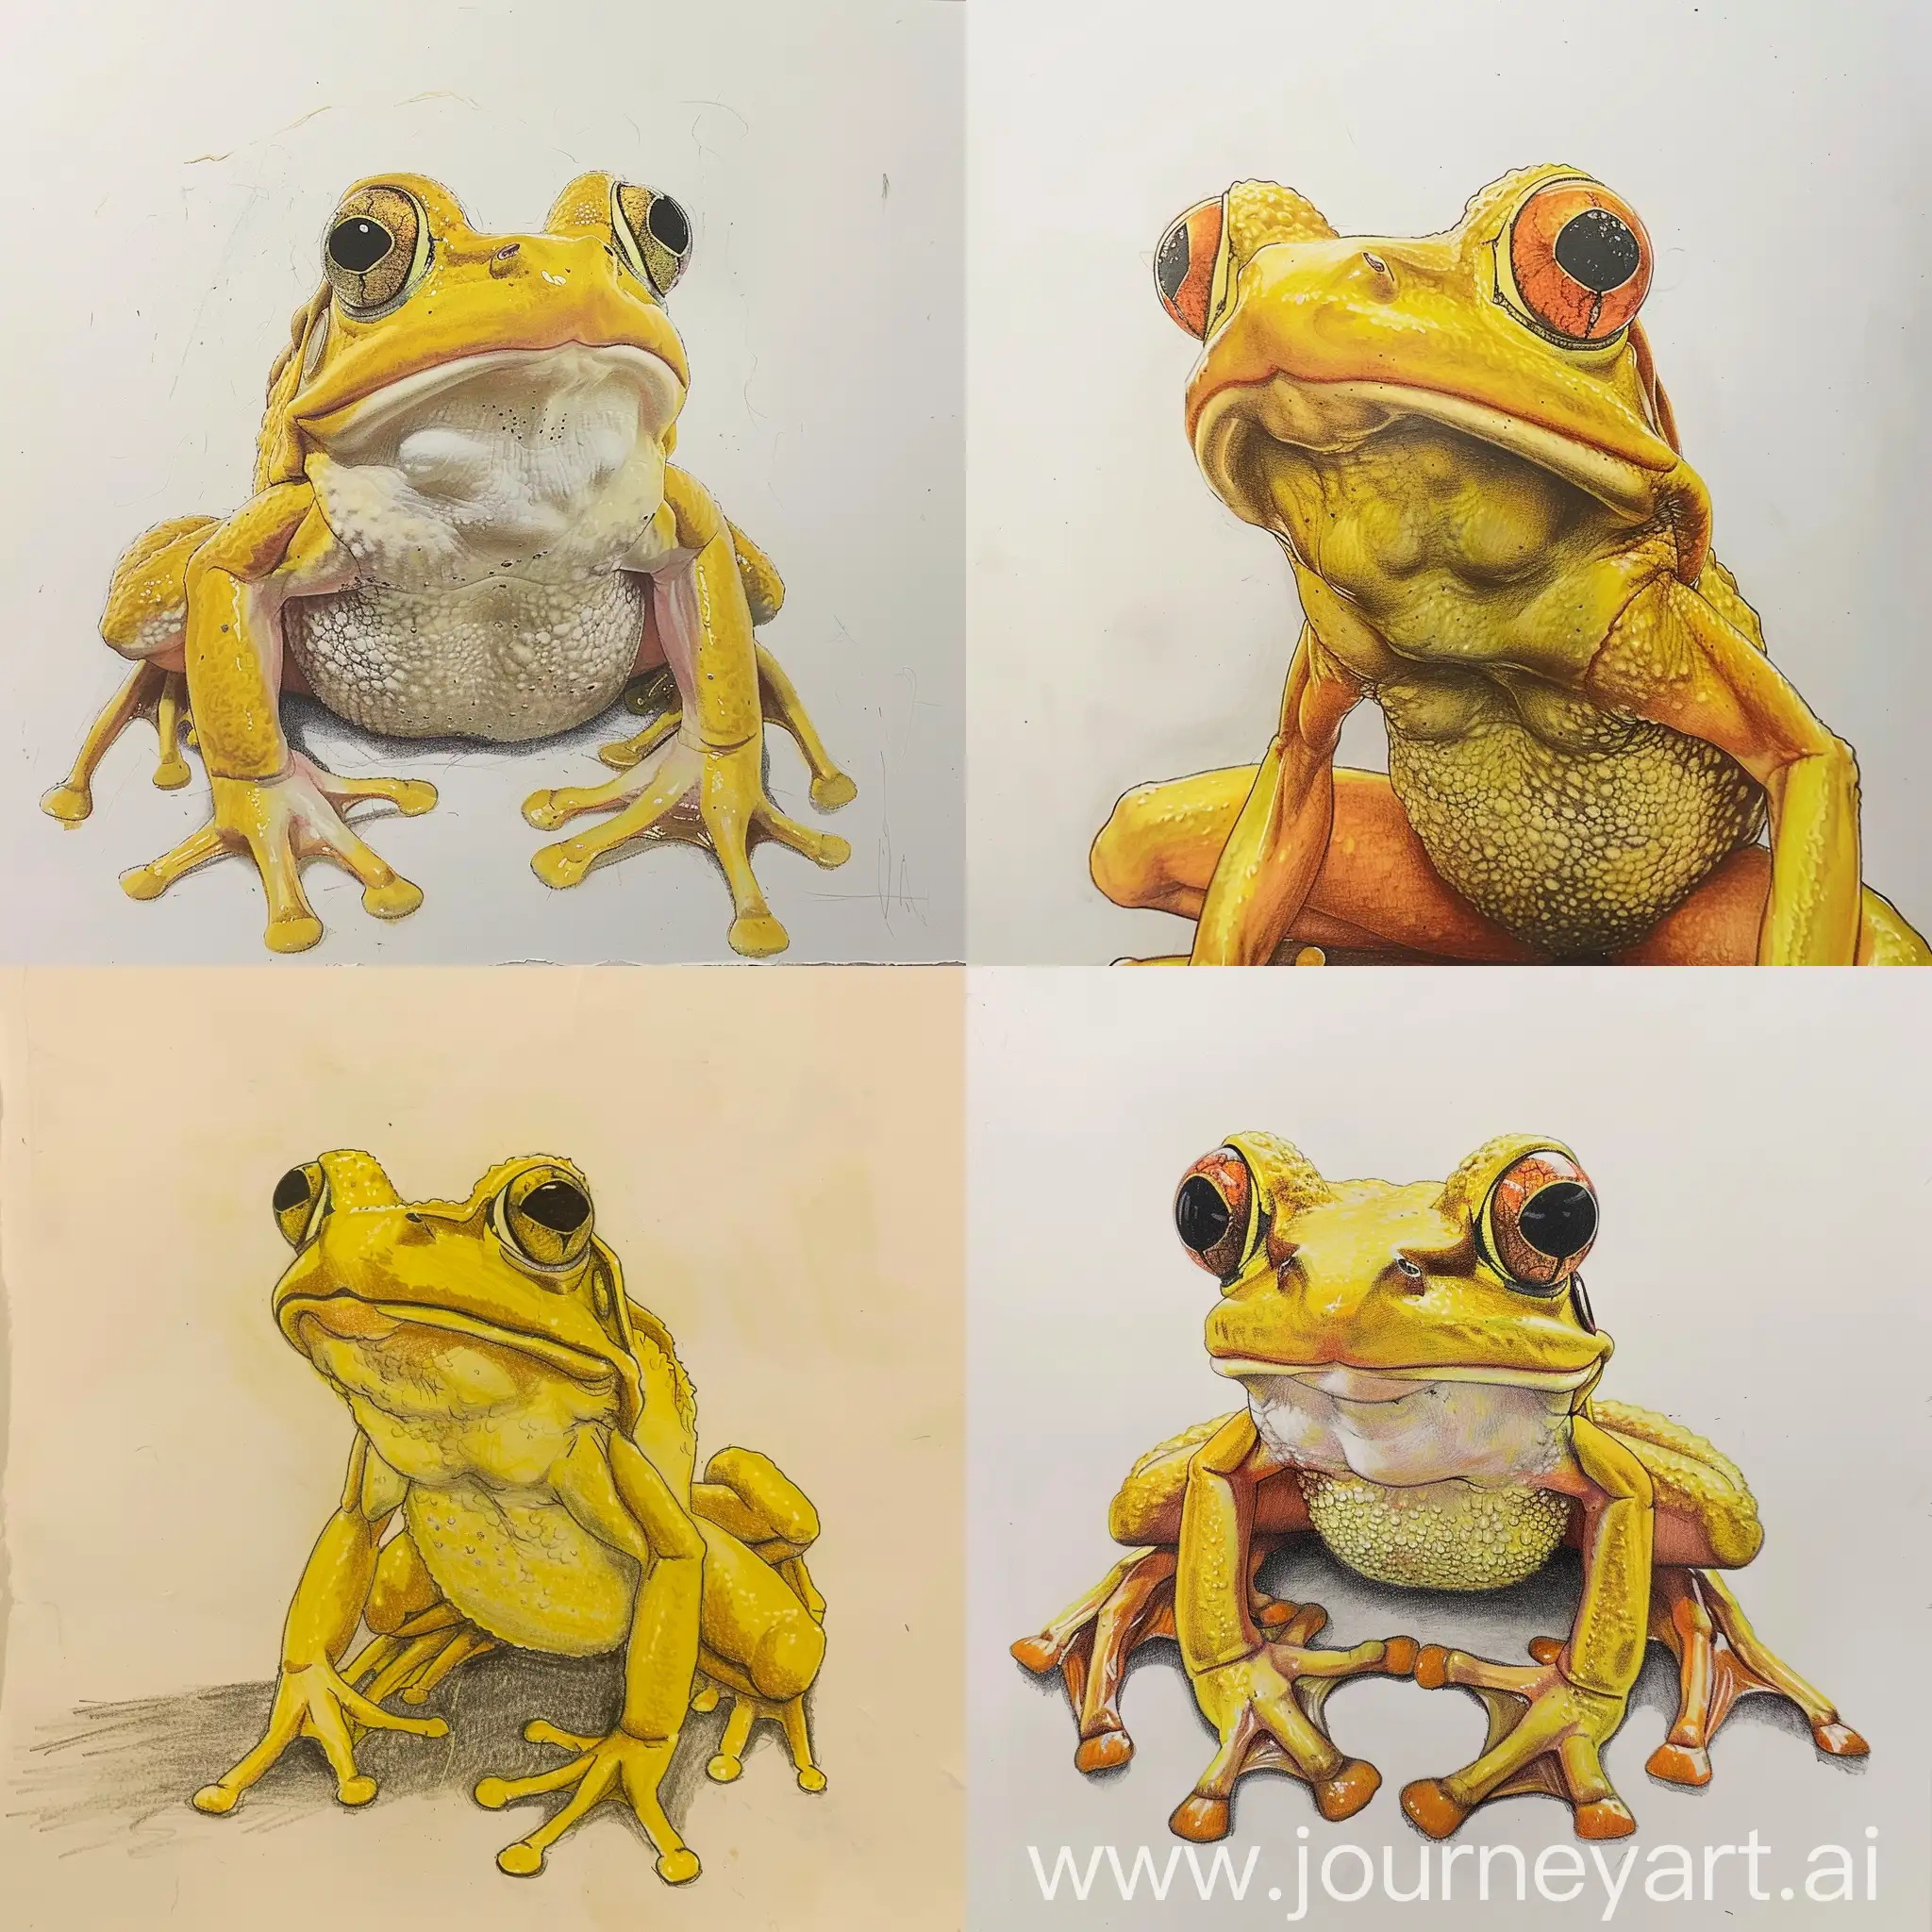 Playful-CrossEyed-Yellow-Frog-Drawing